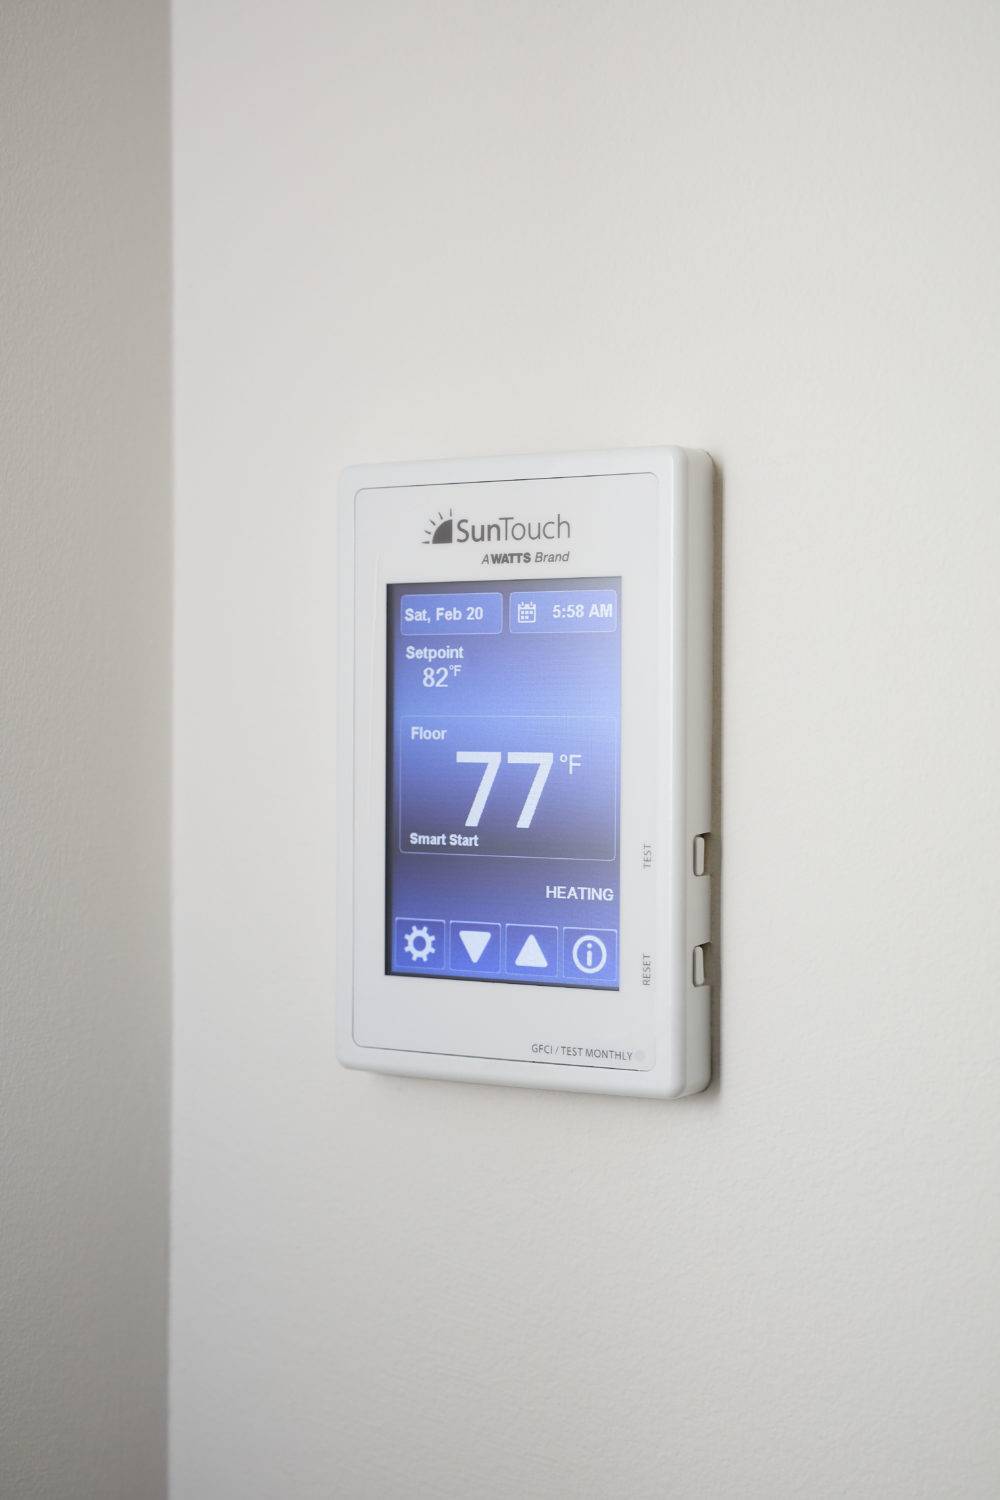 SunTouch heated floors programmable thermostat display